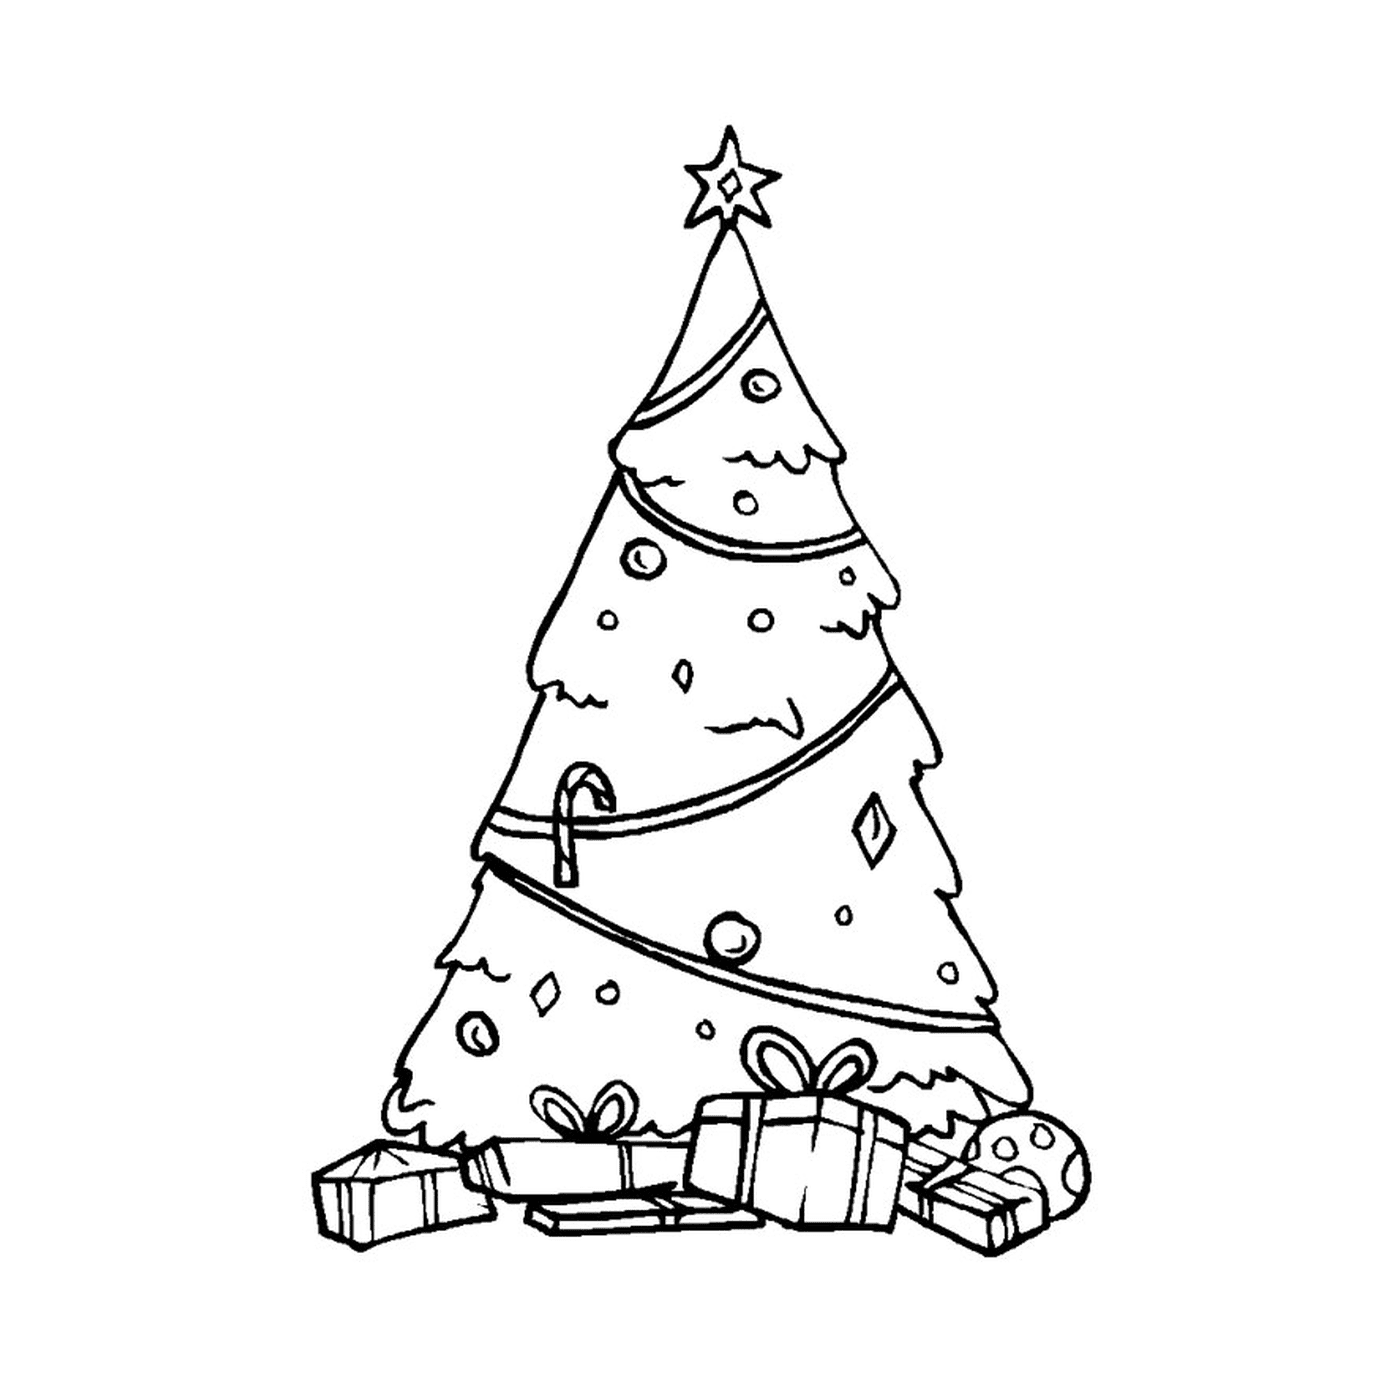  A traditional Christmas tree 